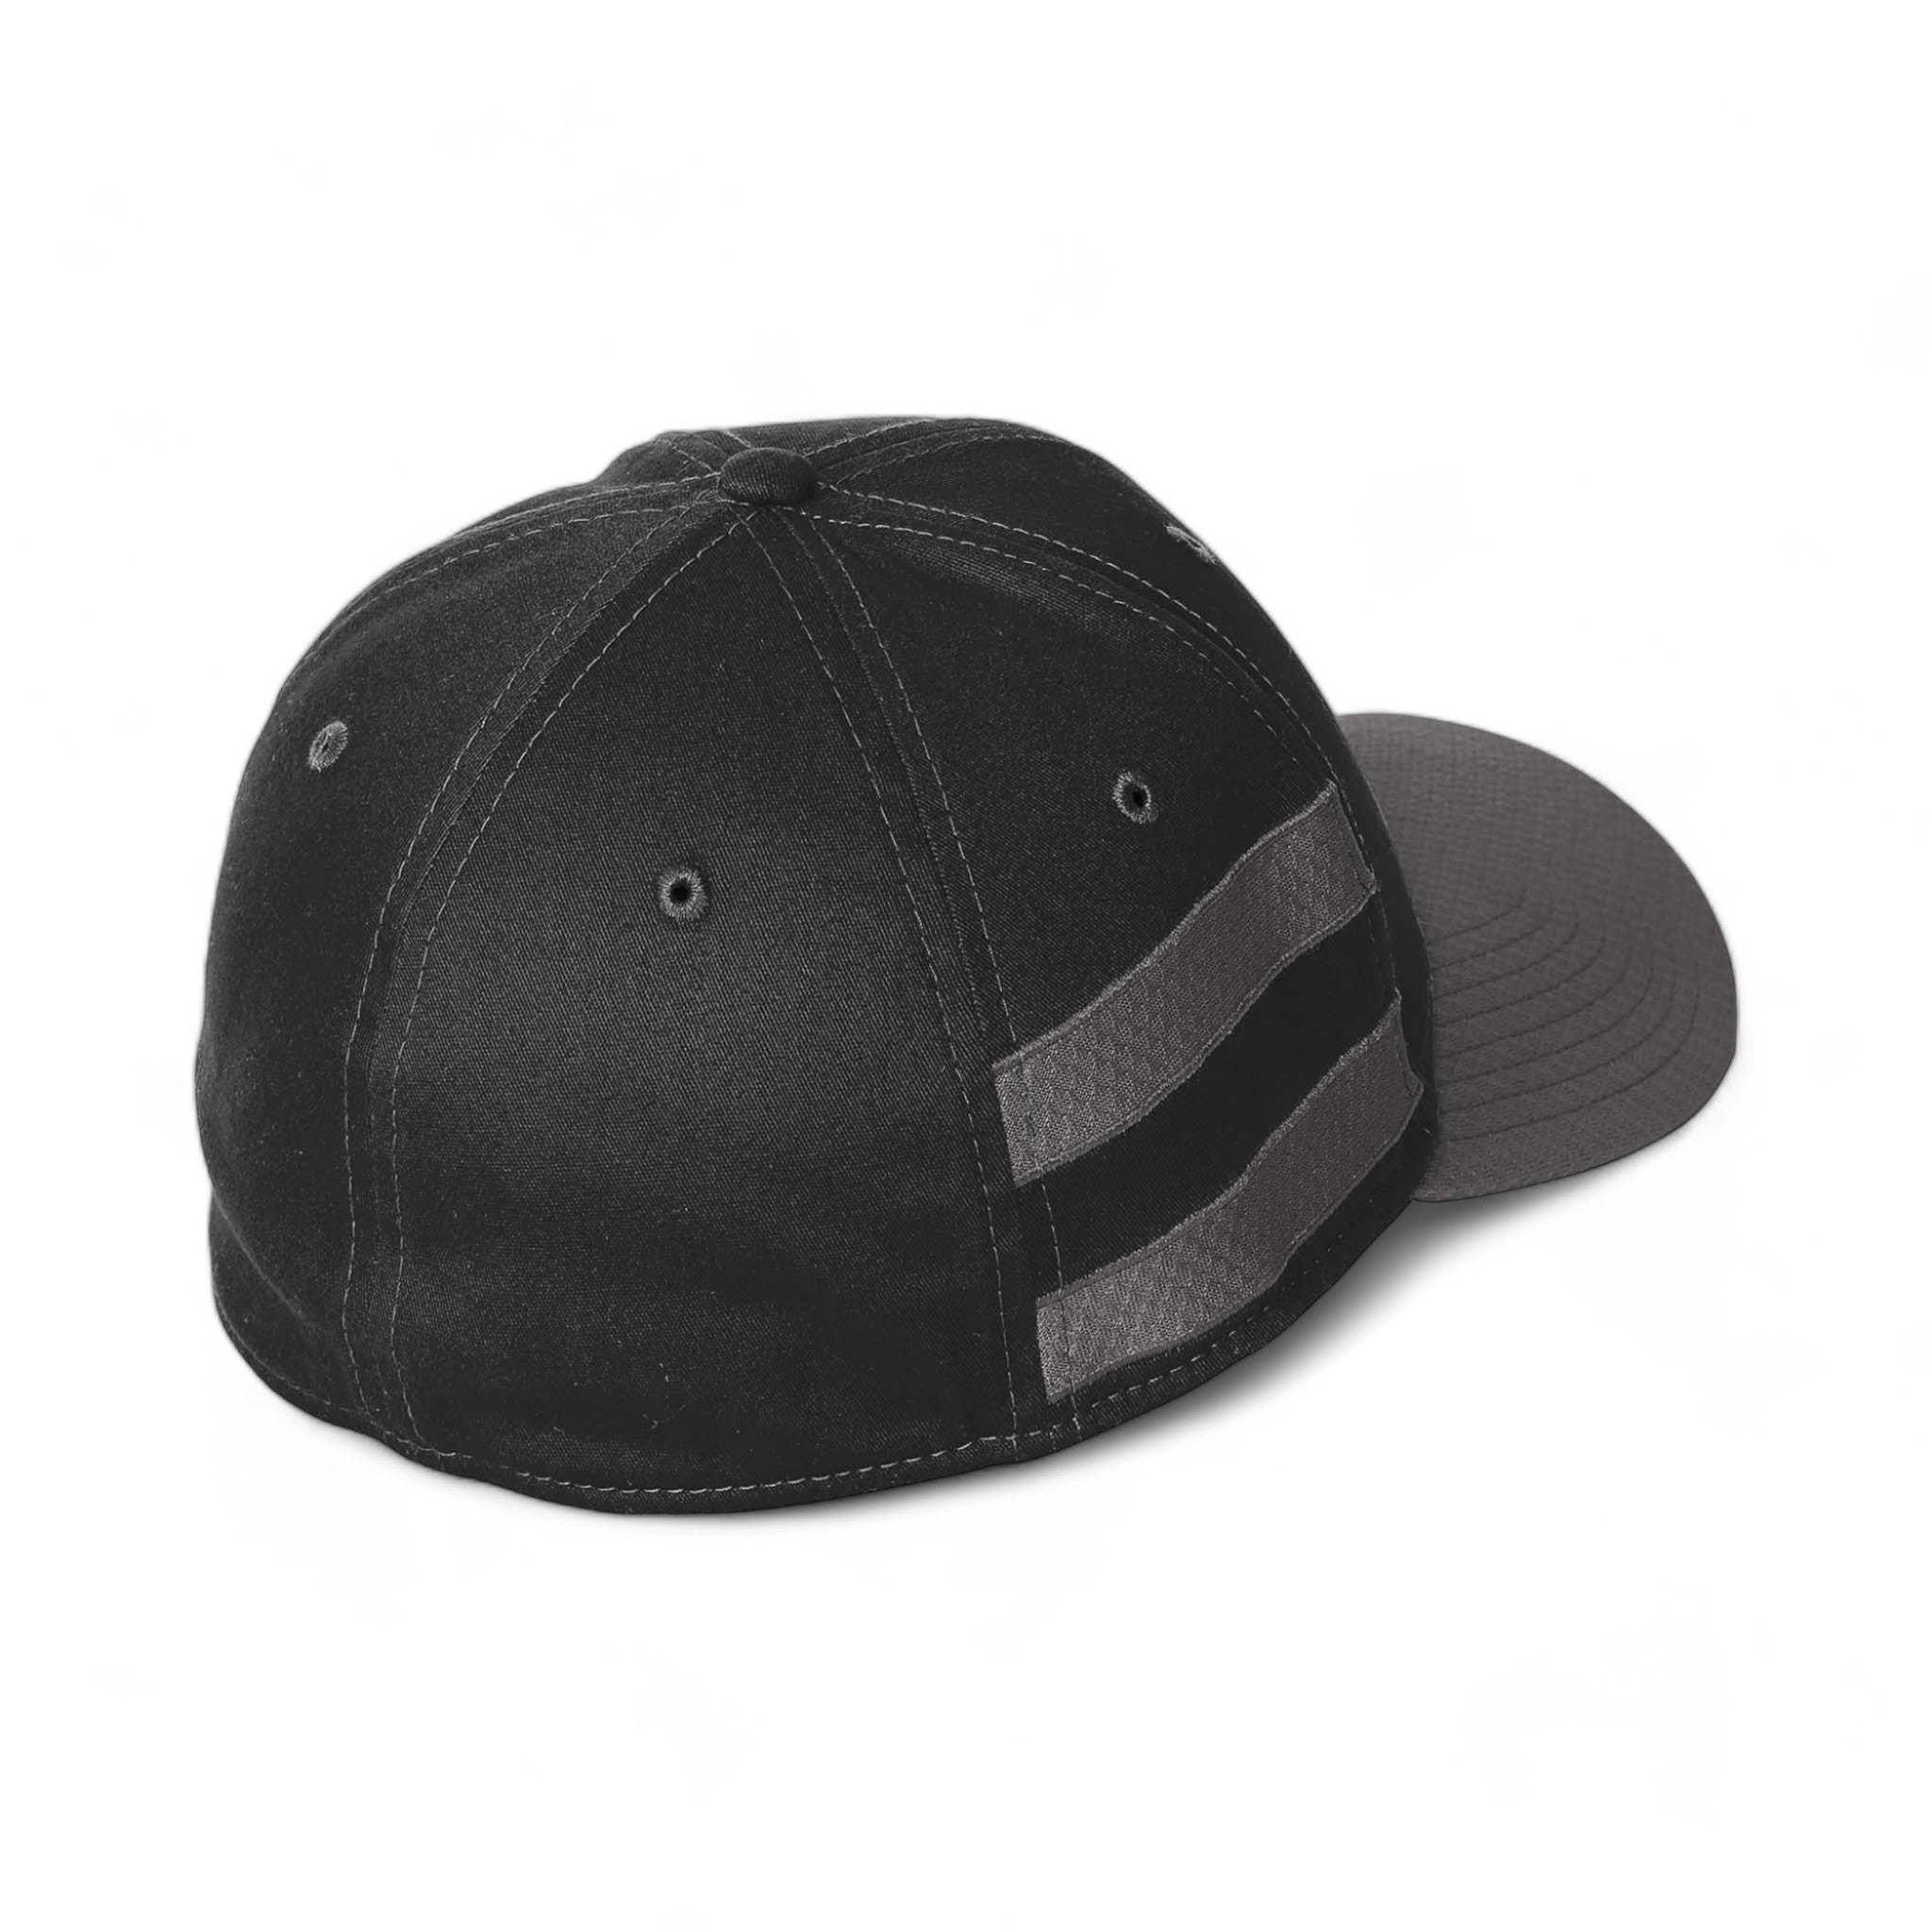 Back view of New Era NE1122 custom hat in black and graphite